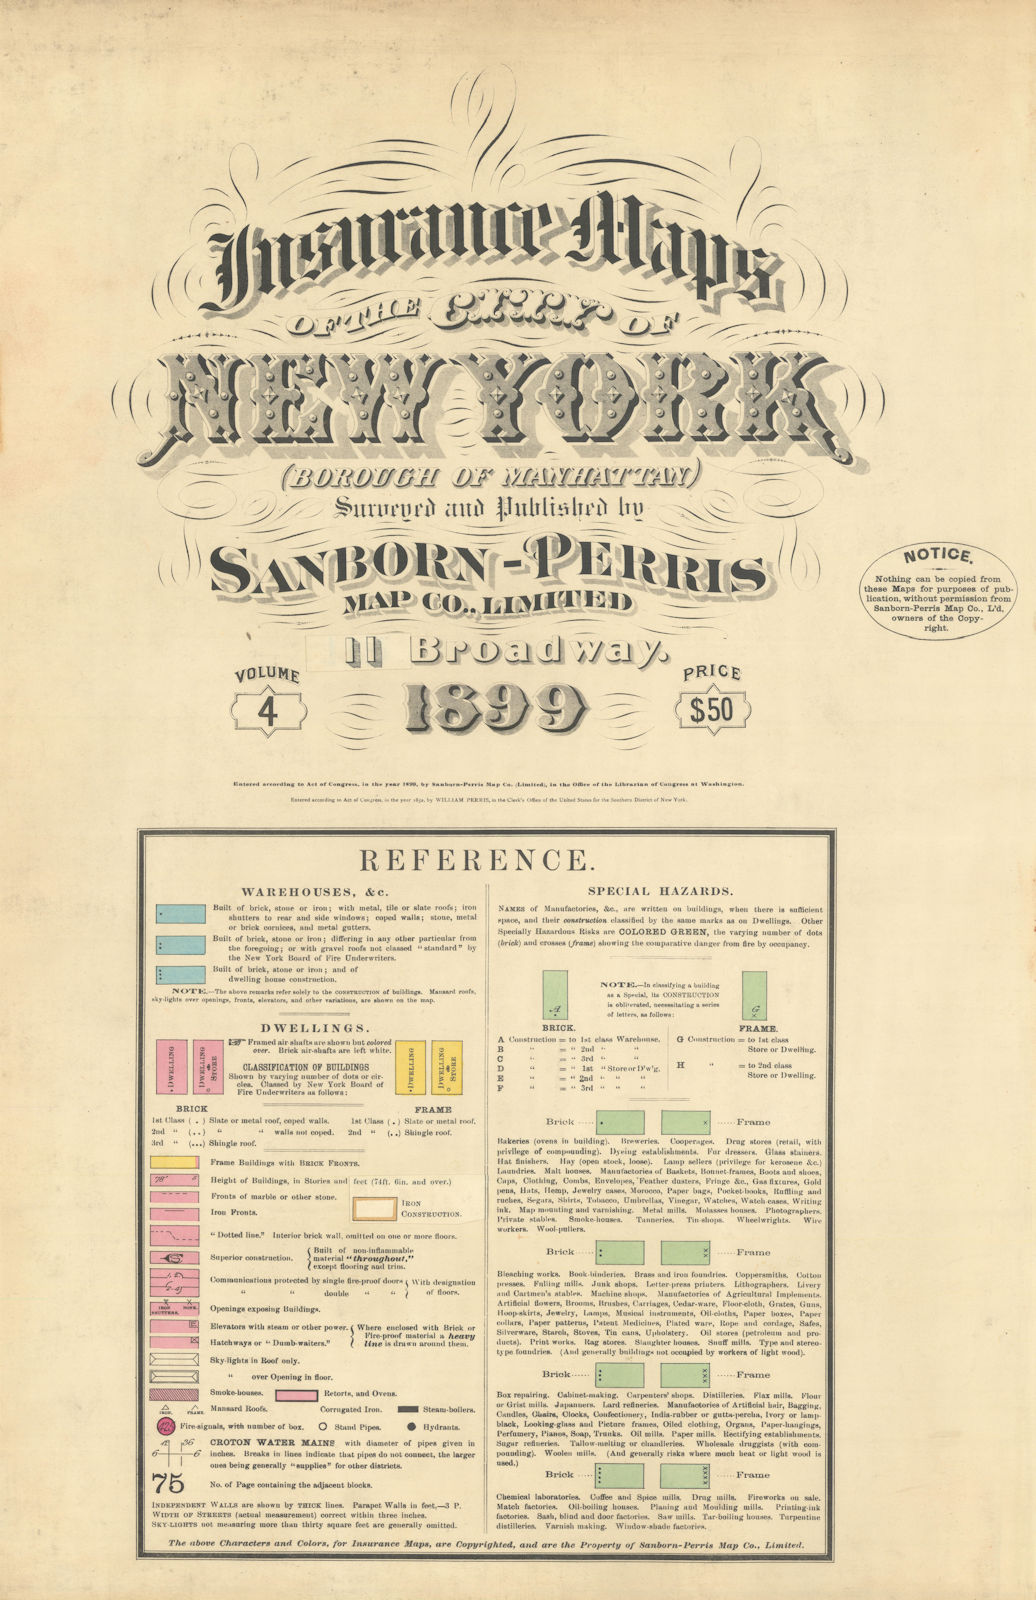 Associate Product City of New York Insurance maps Vol 4 Title page. Manhattan. SANBORN 1899